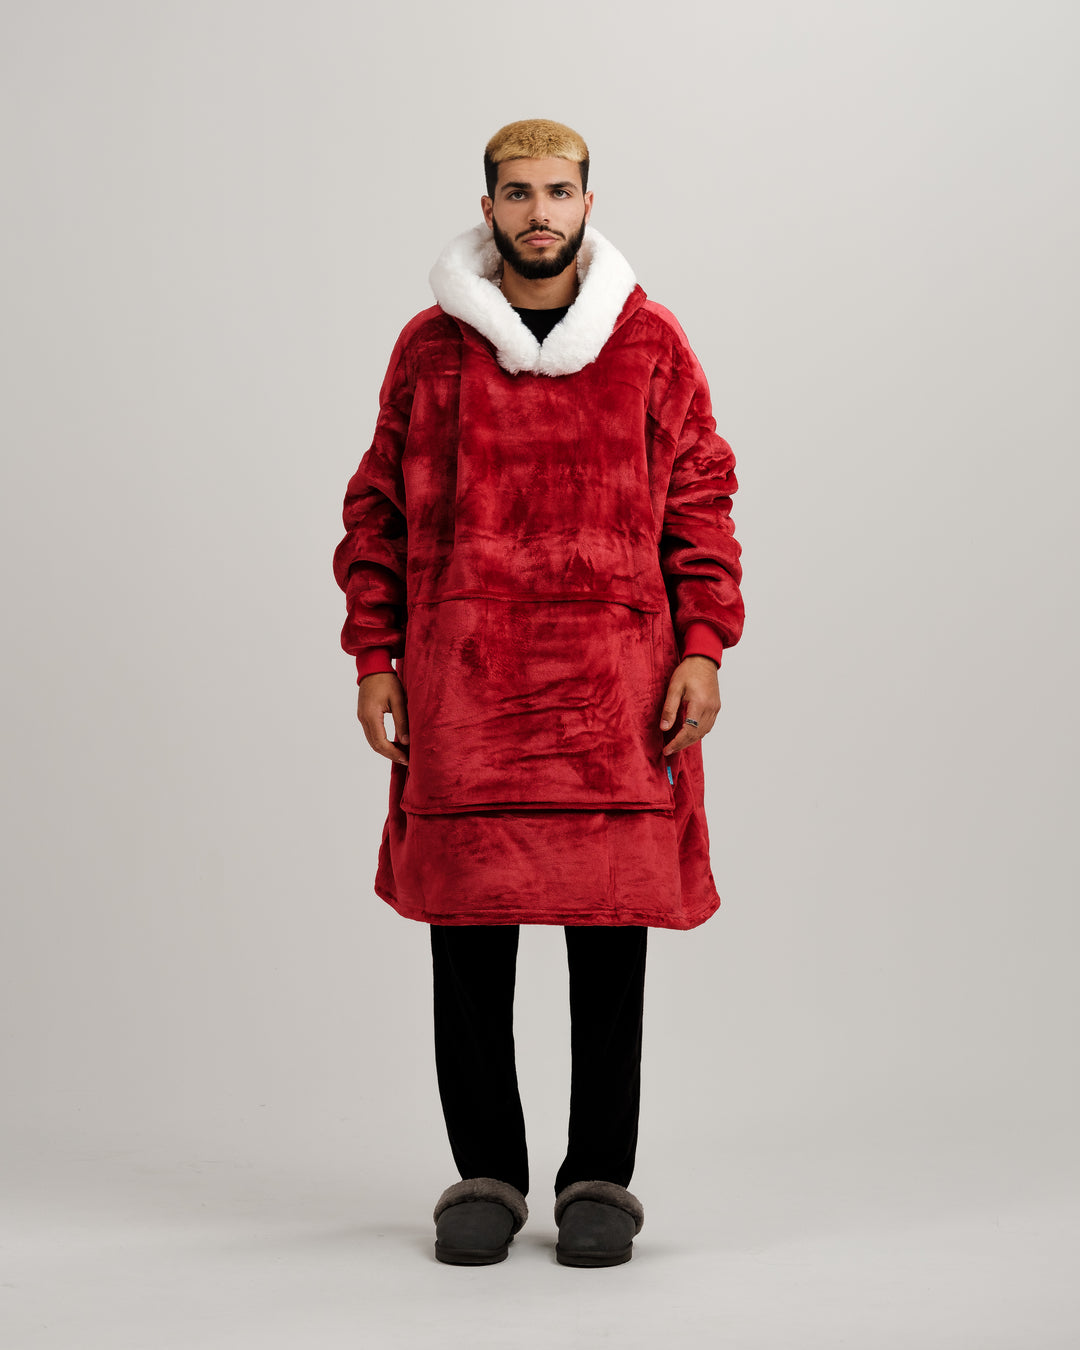 ONY Furlined Hoodie Blanket - Red - It's Ony